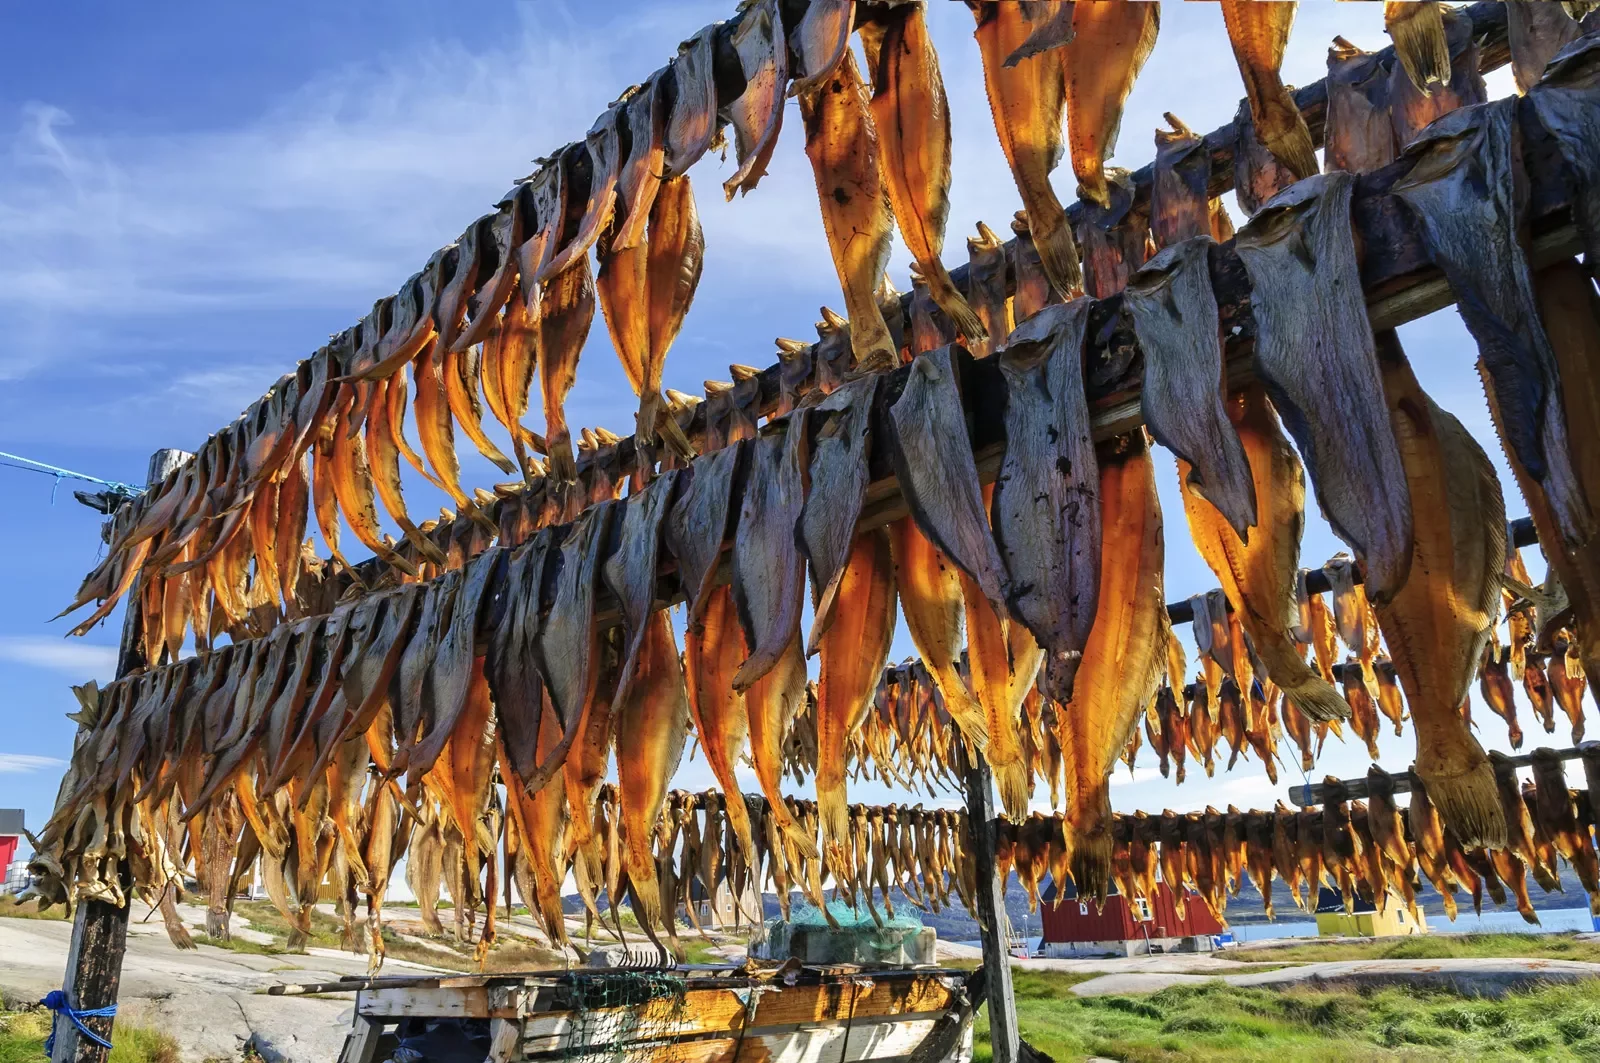 Fish drying on large drying racks